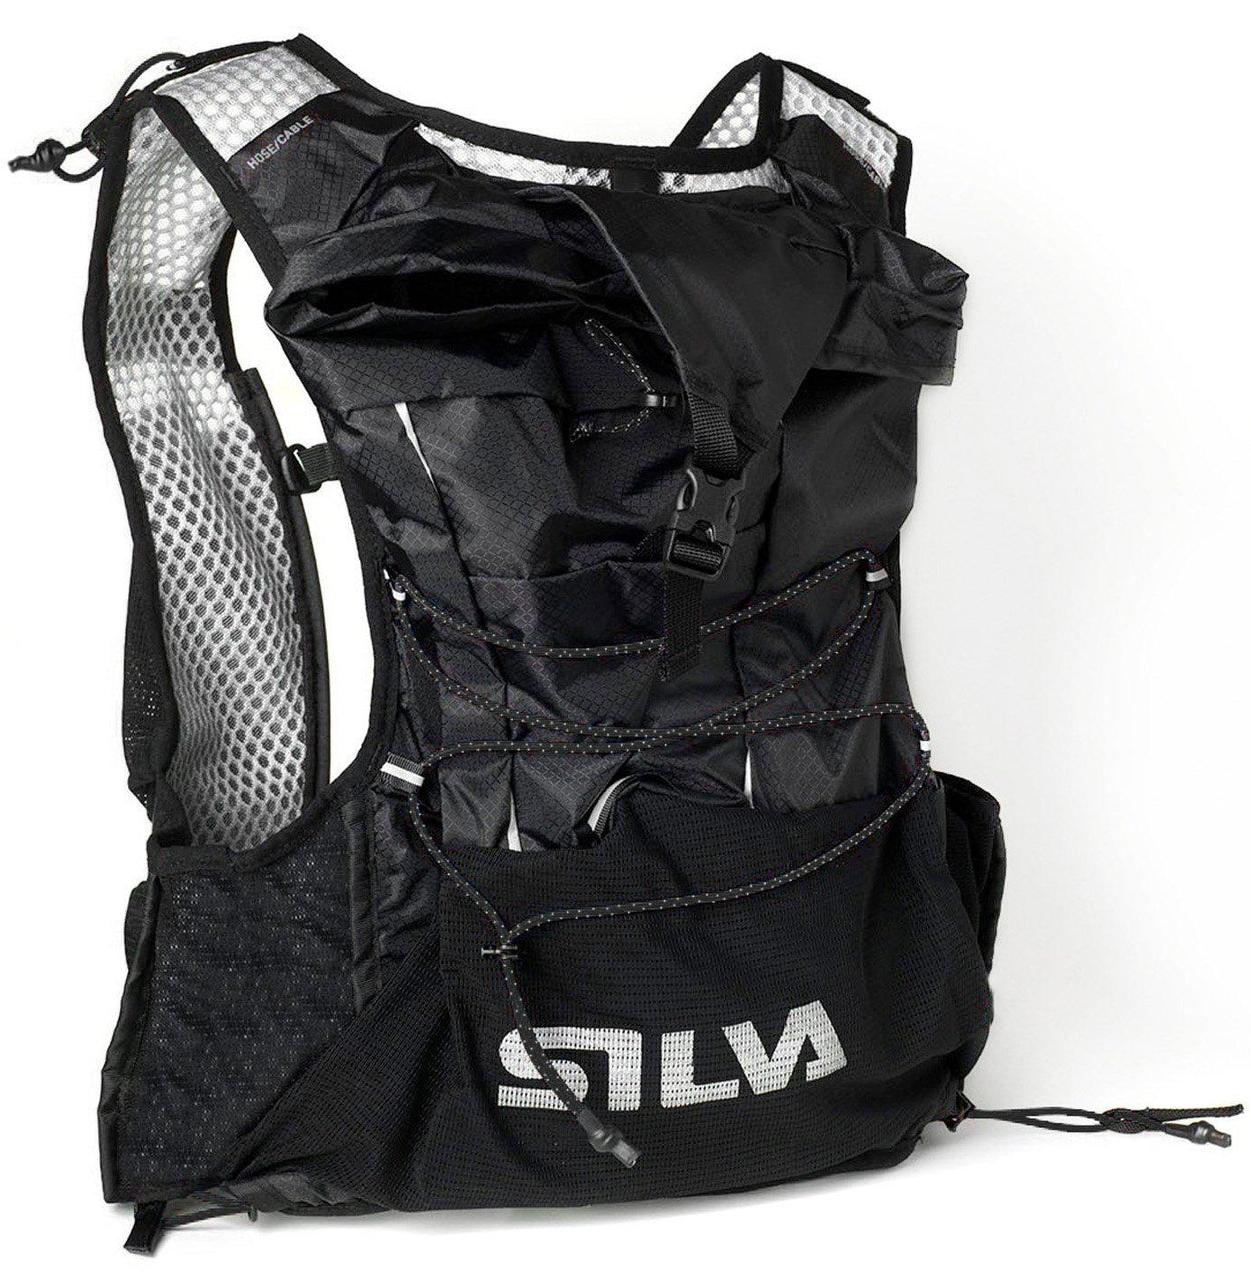 Жилет для бега Silva Strive 10 XS/S Light Black